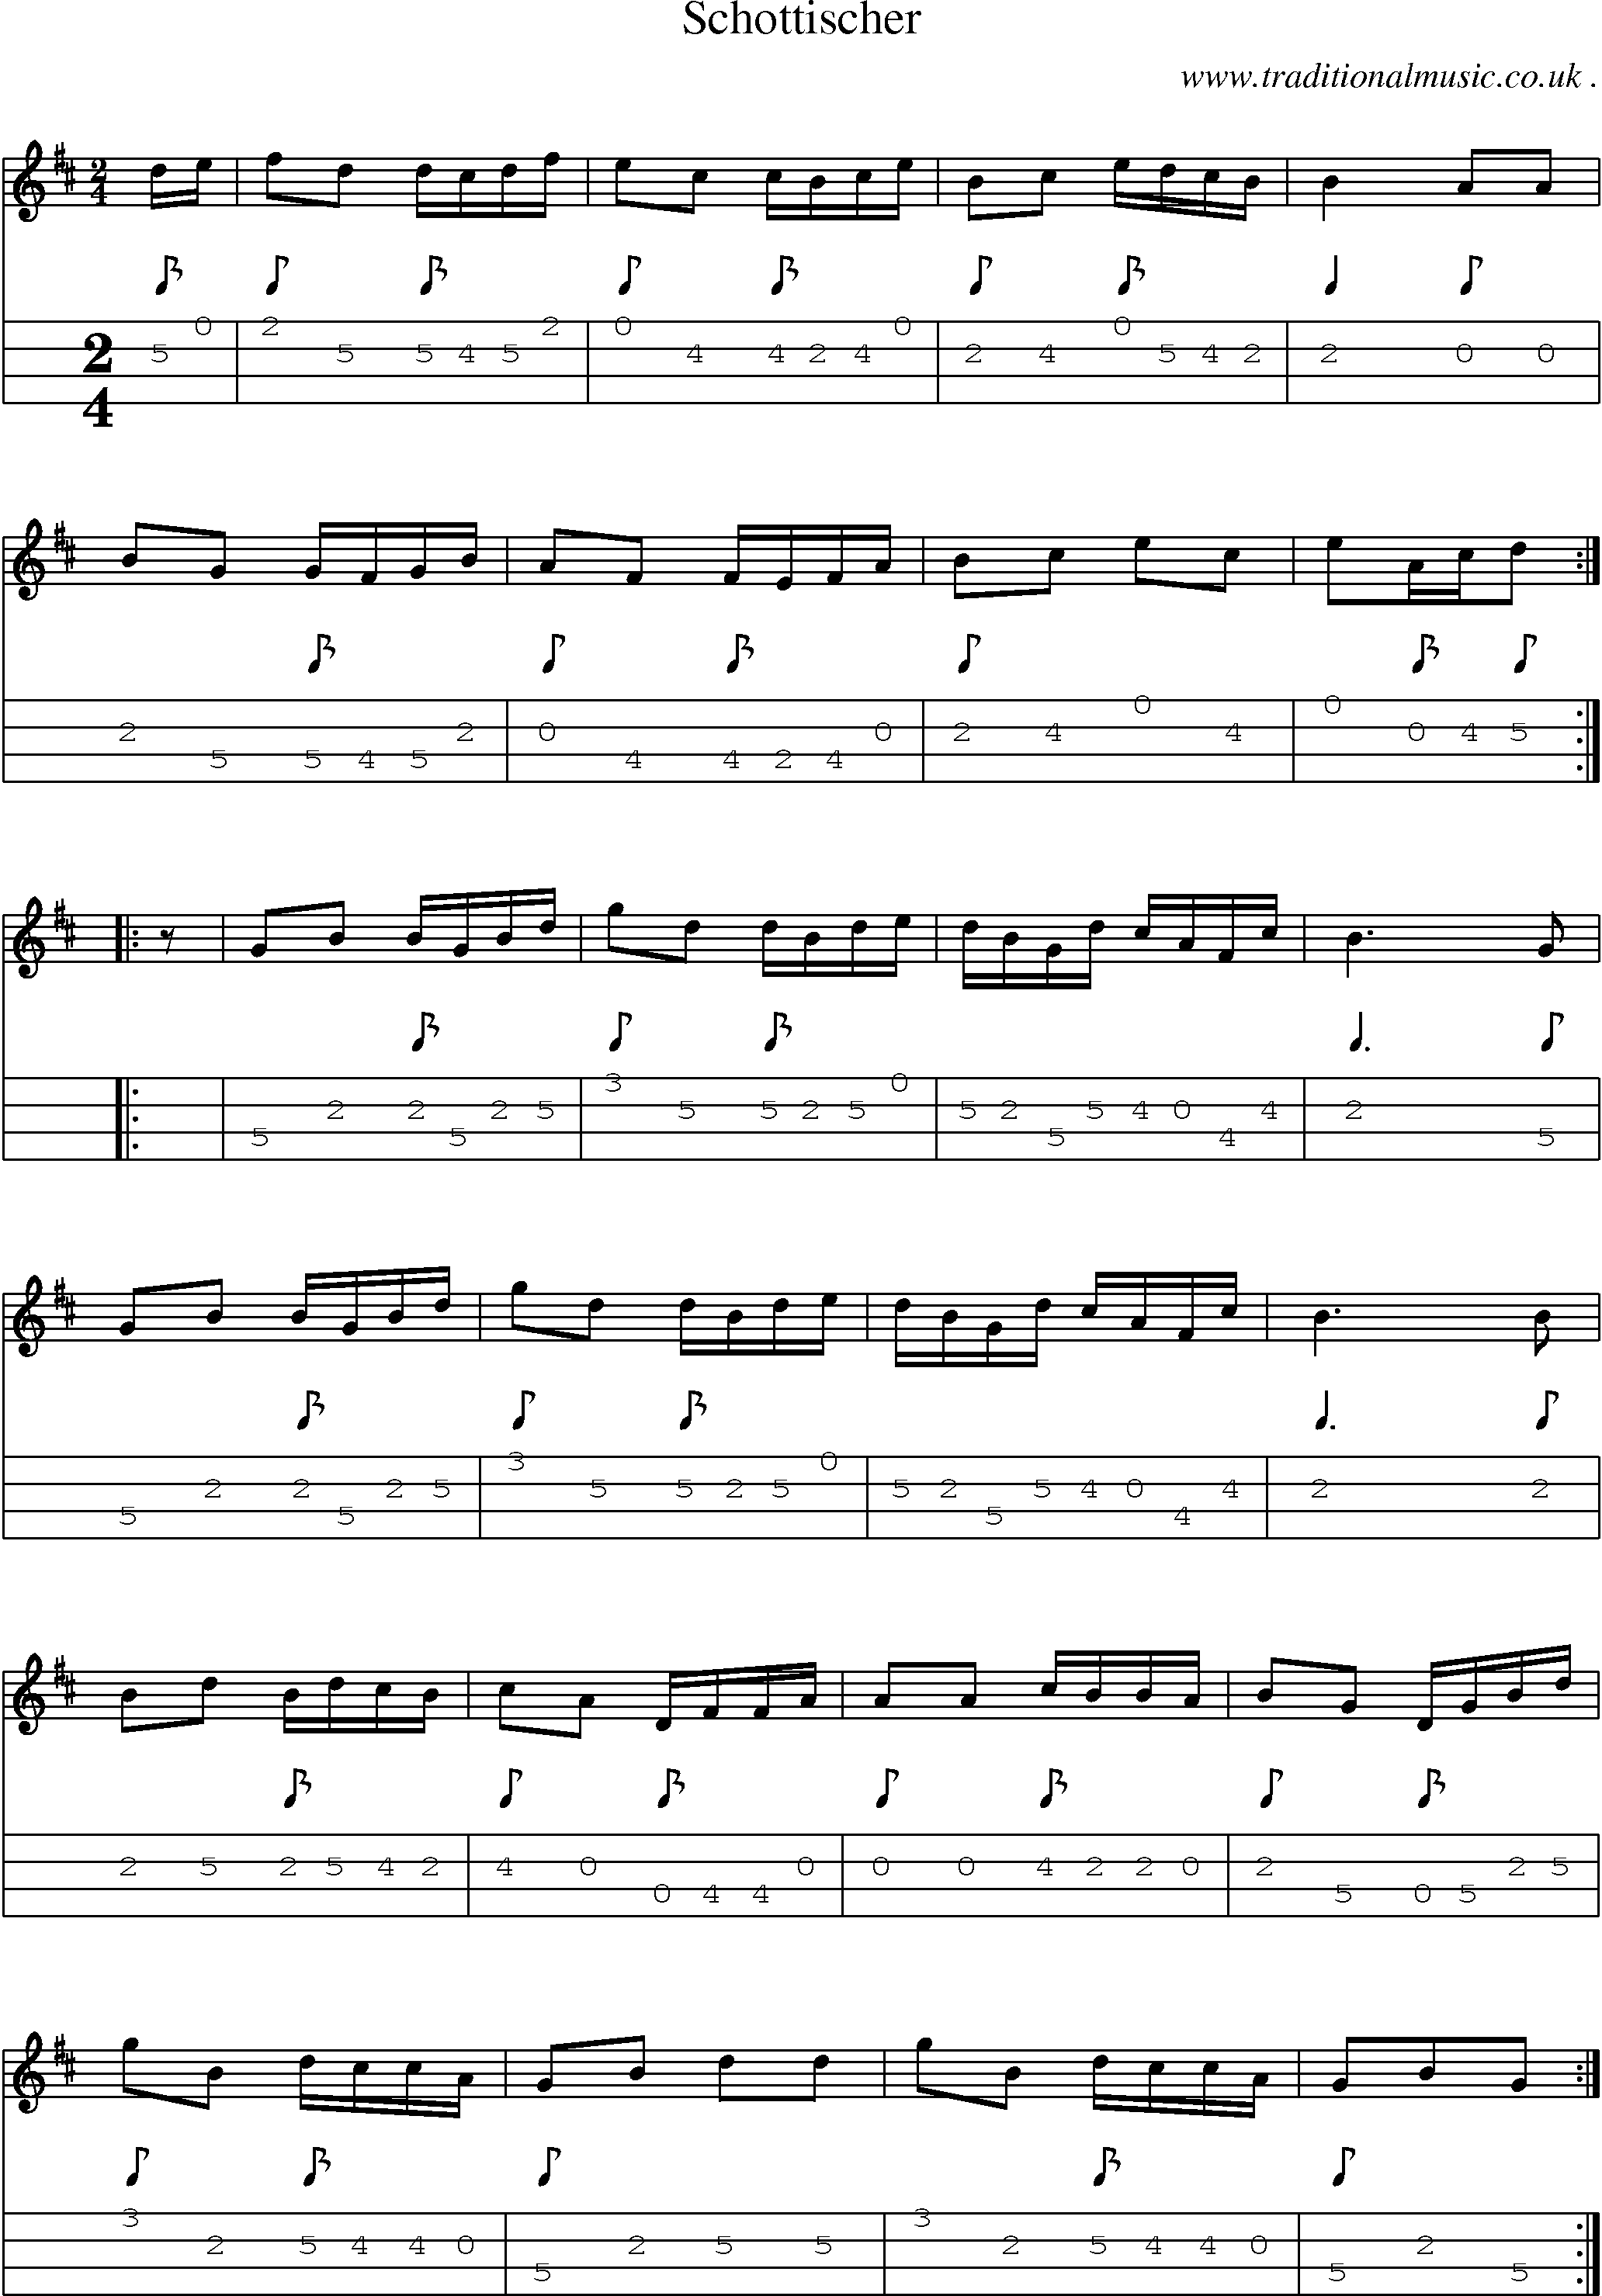 Sheet-Music and Mandolin Tabs for Schottischer